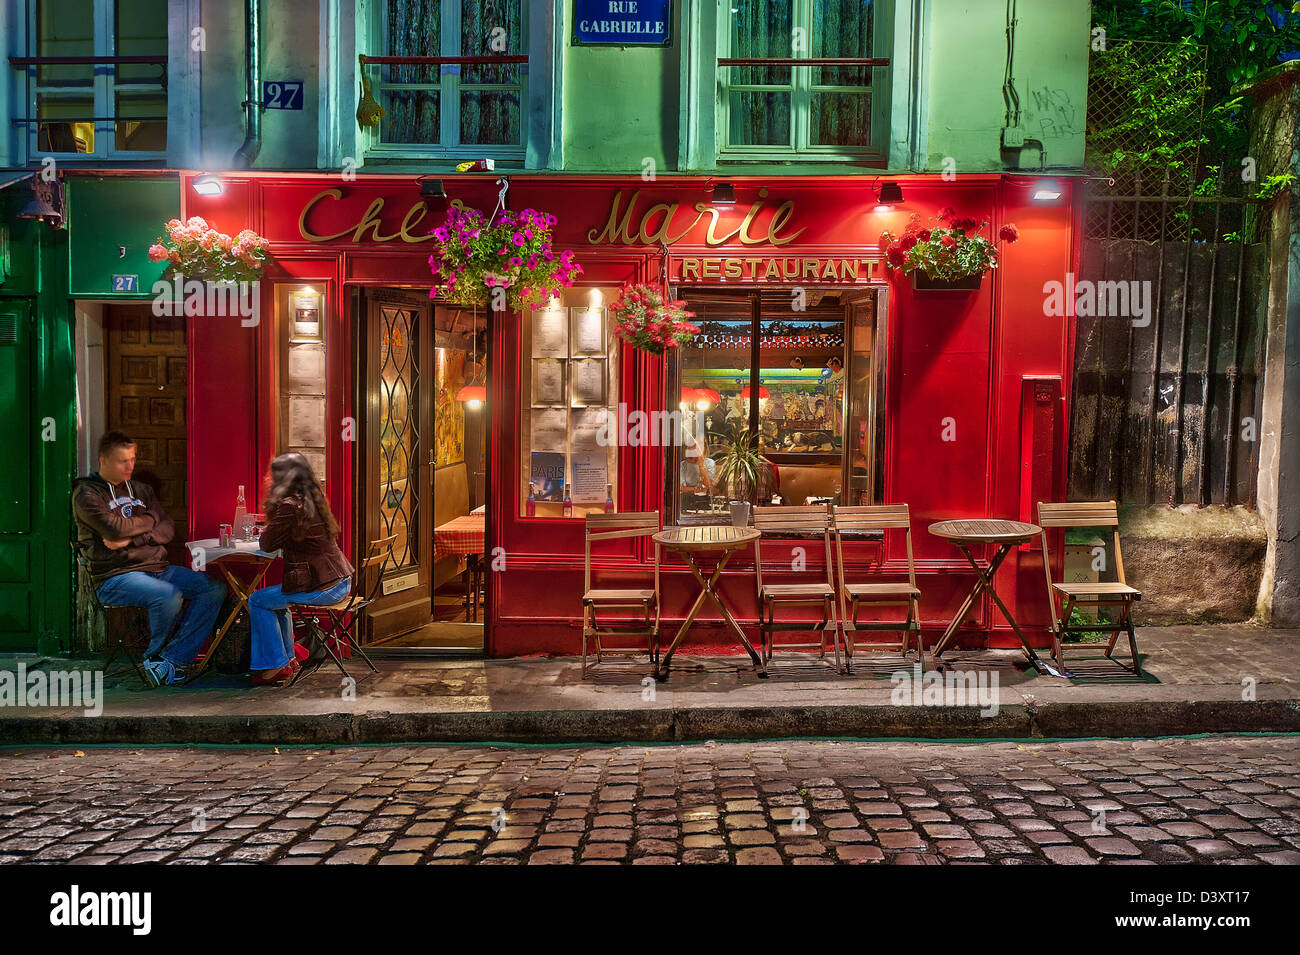 romantic evening for a couple at the terrace of Restaurant “Chez Marie”, 27 Rue Gabrielle, Montmartre, Paris, France Stock Photo